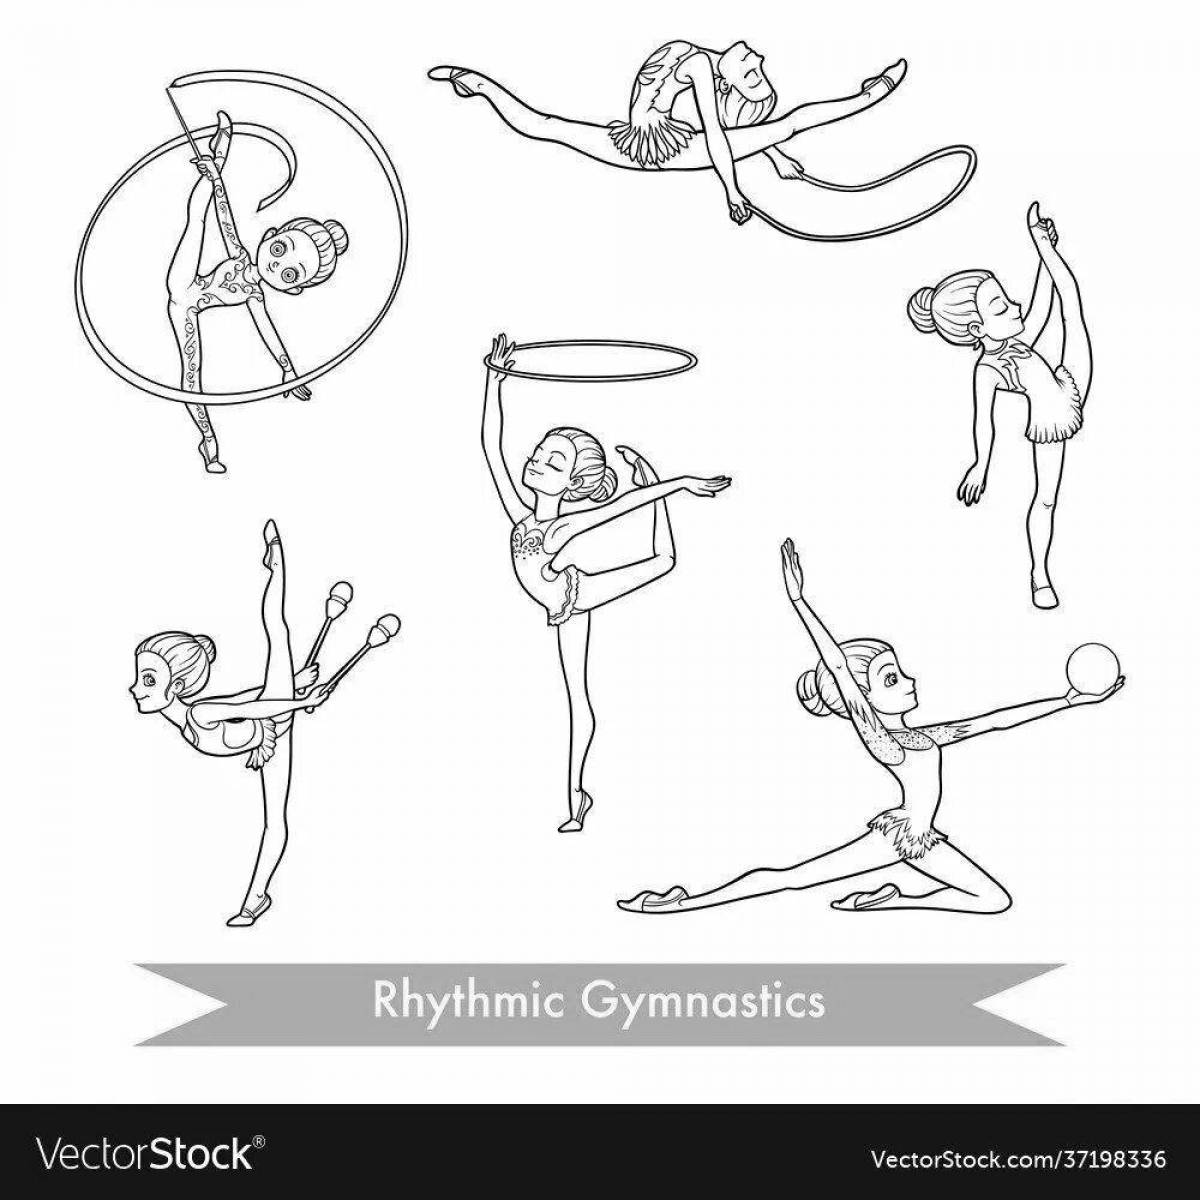 Gymnast with ball